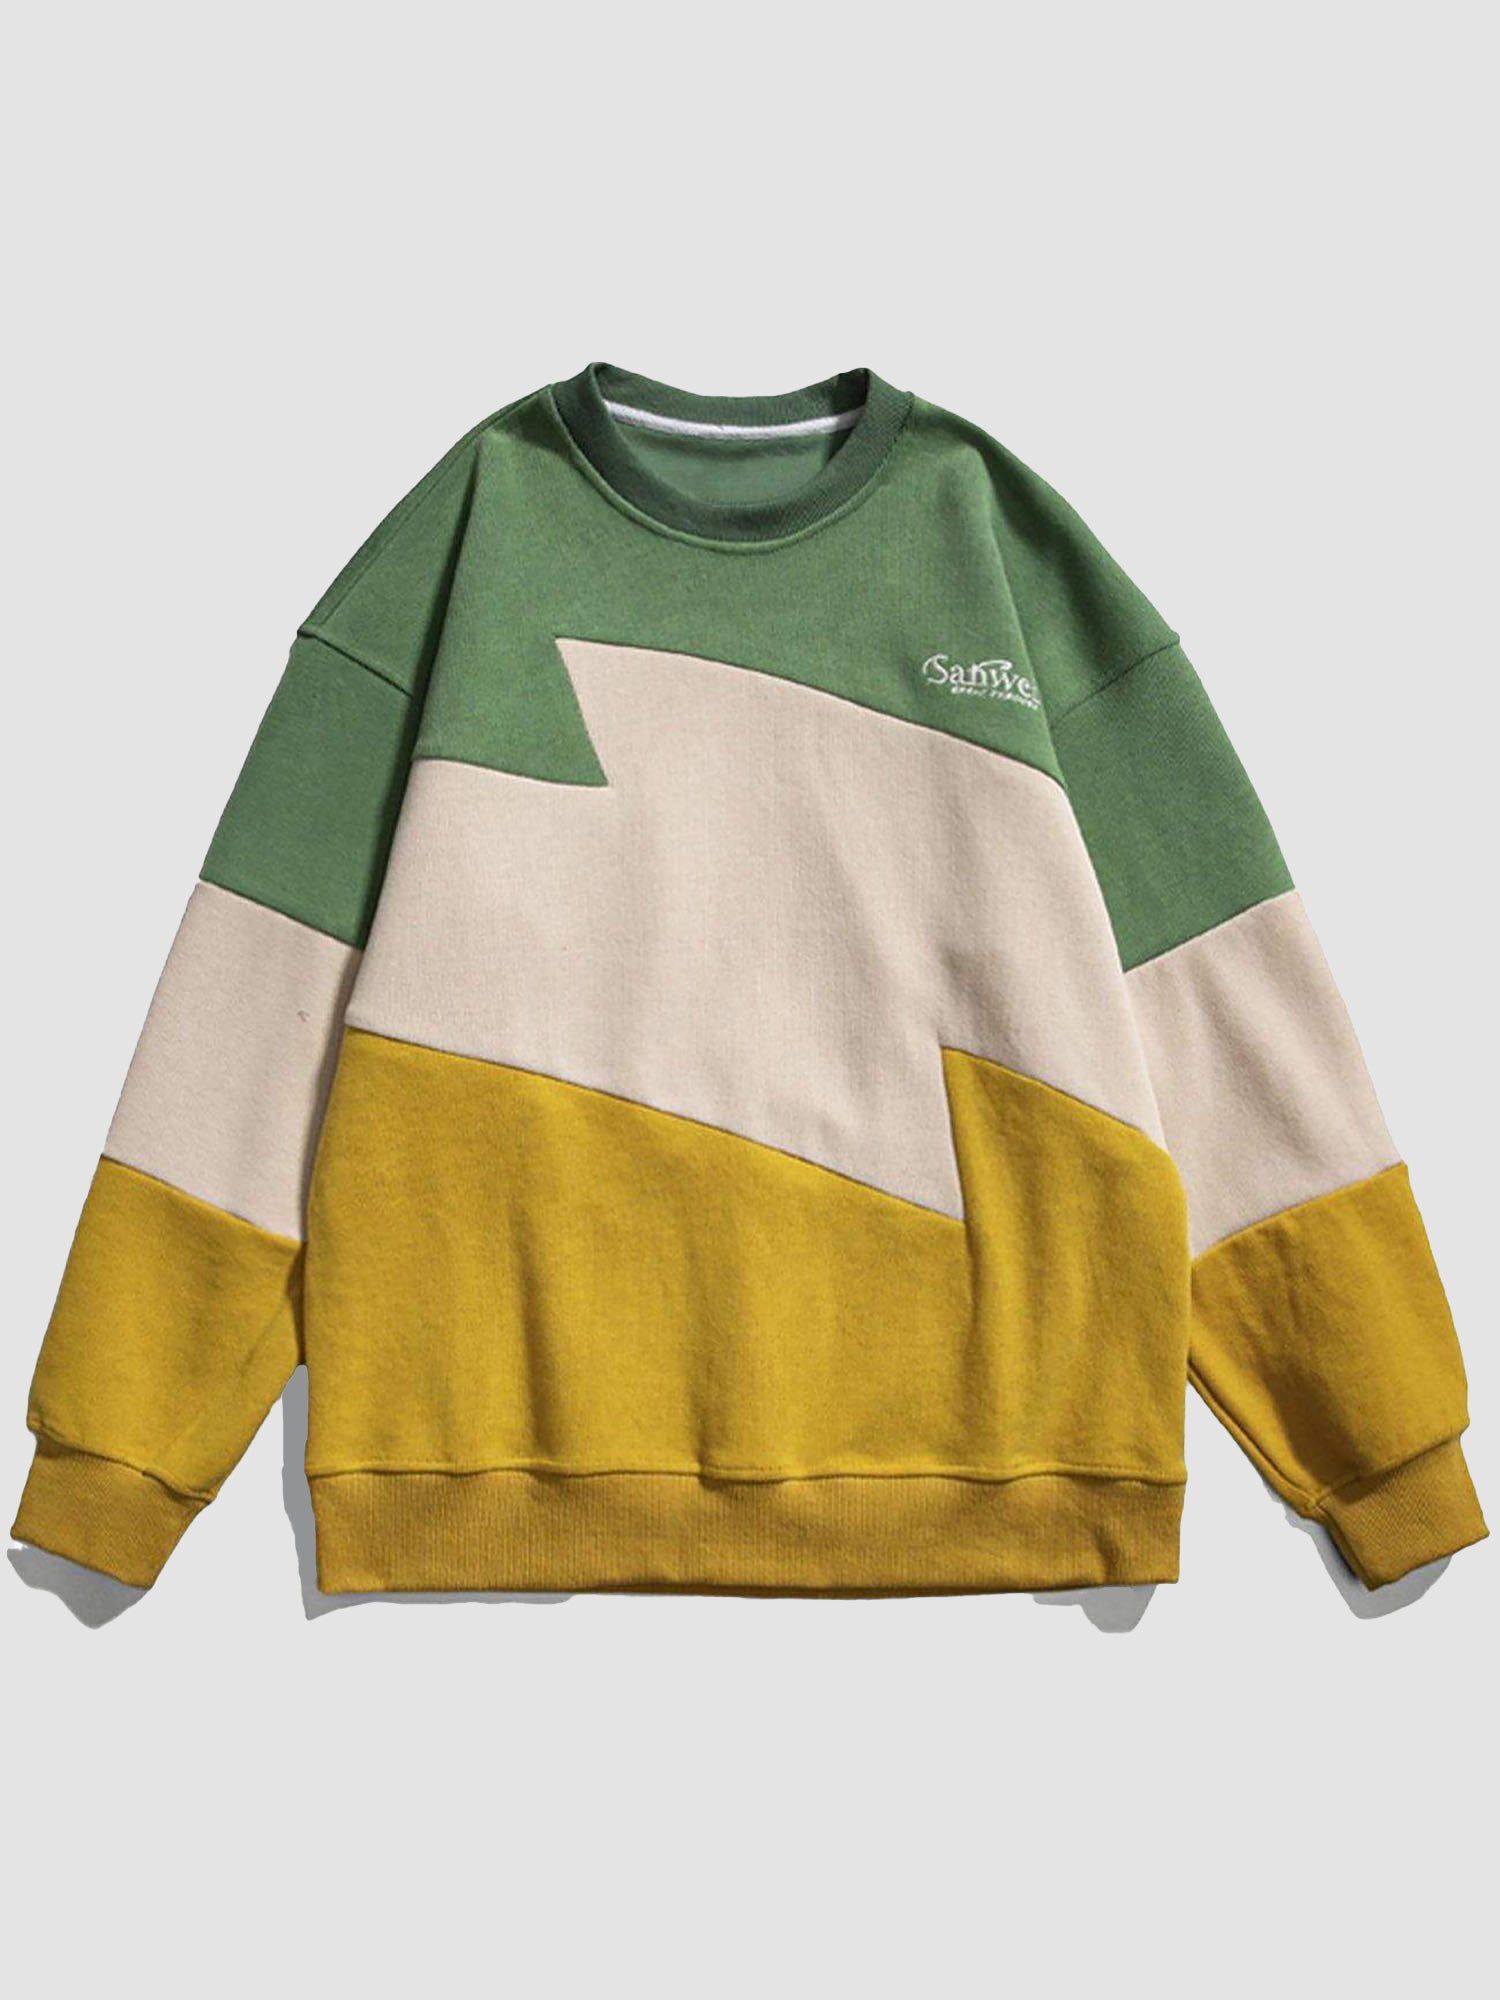 JUSTNOTAG Vintage Contrast Panel Sweatshirt